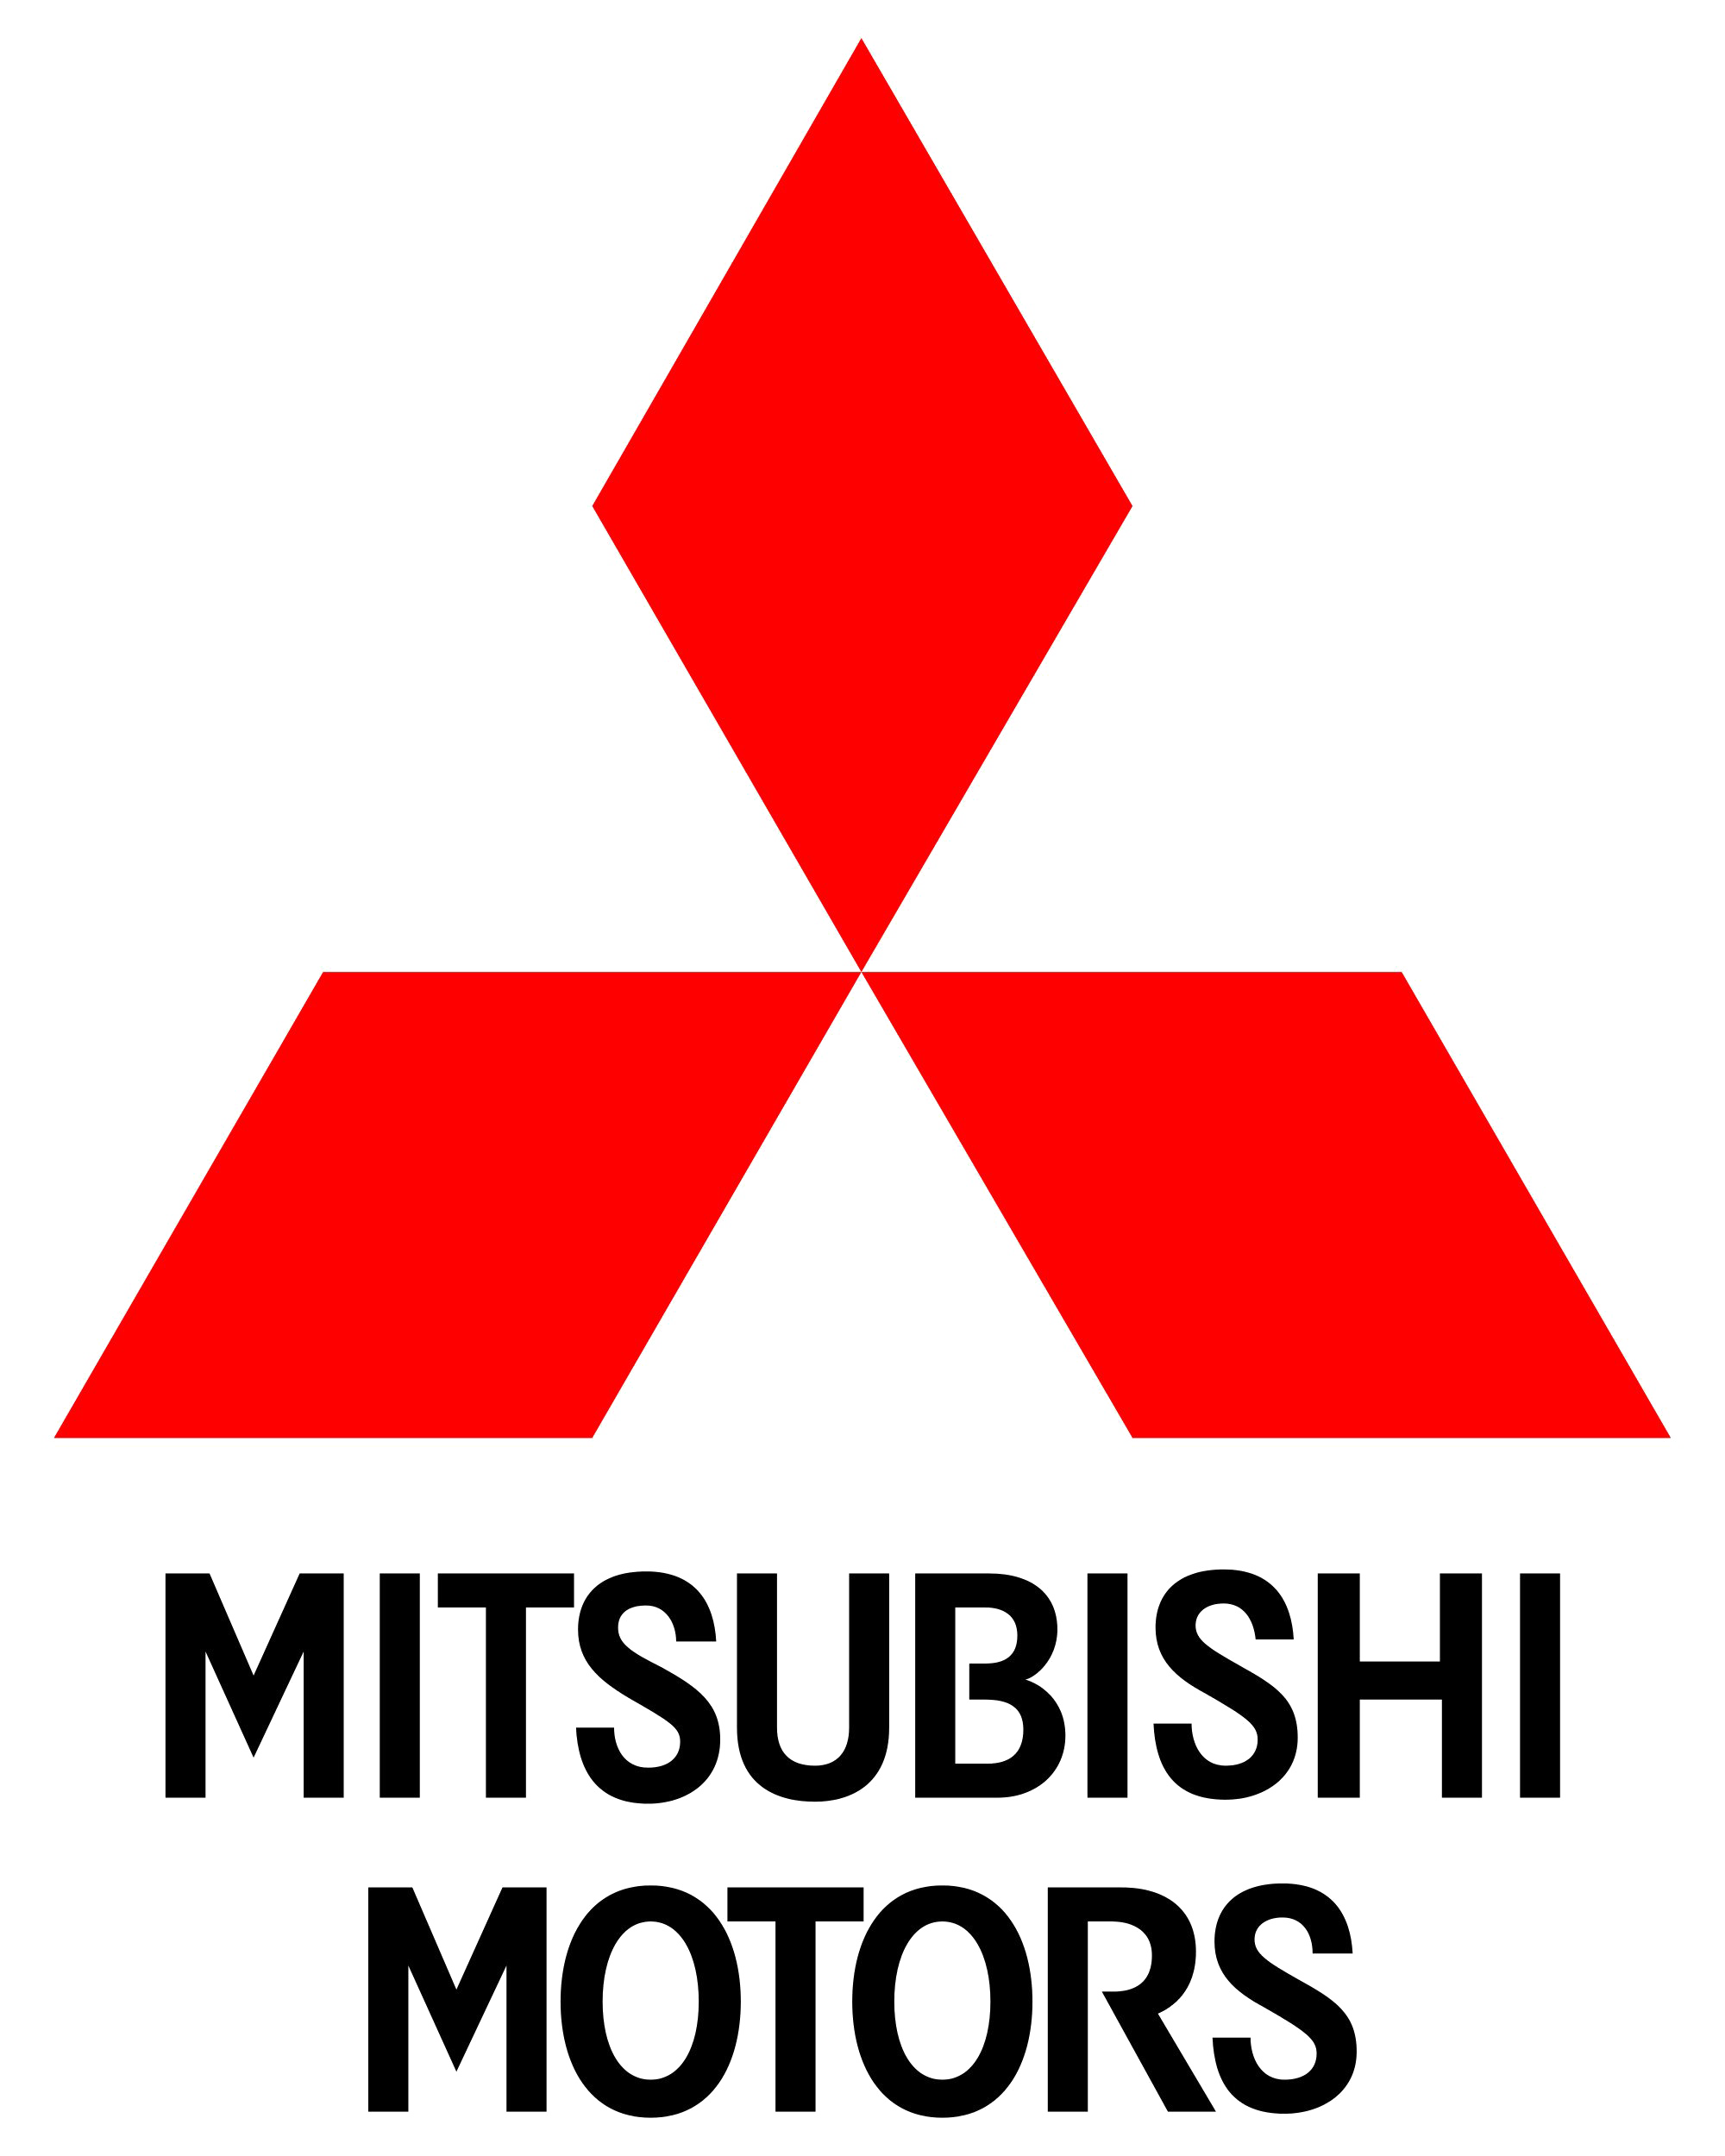 Fondo de imagen de la imagen de Mitsubishi logo